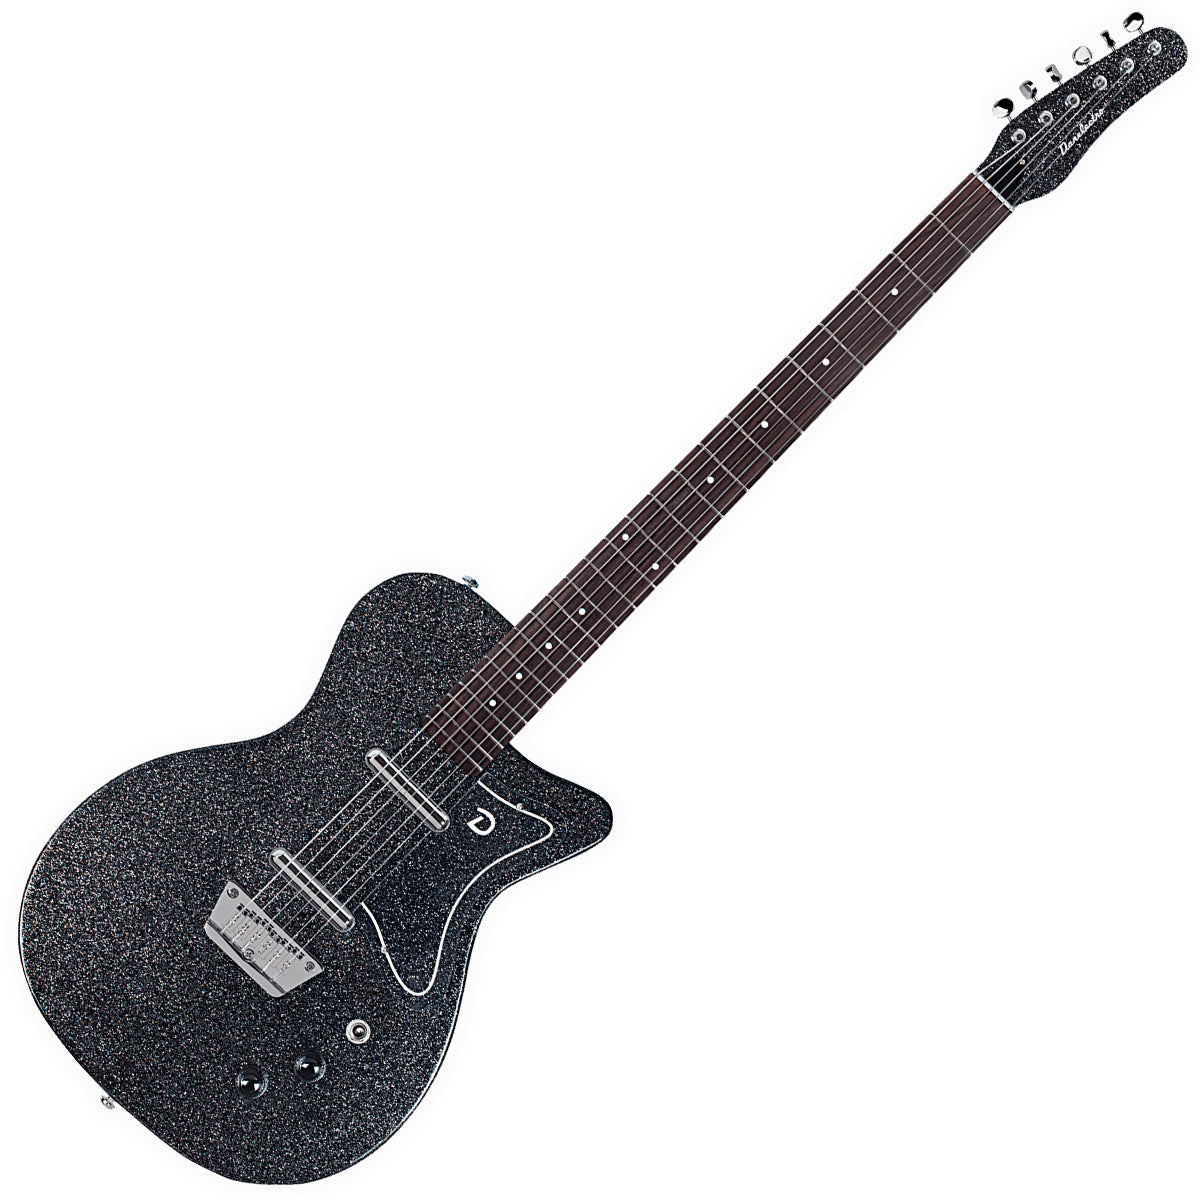 Danelectro '56 Baritone Electric Guitar ~ Black Sparkle, Electric Guitar for sale at Richards Guitars.